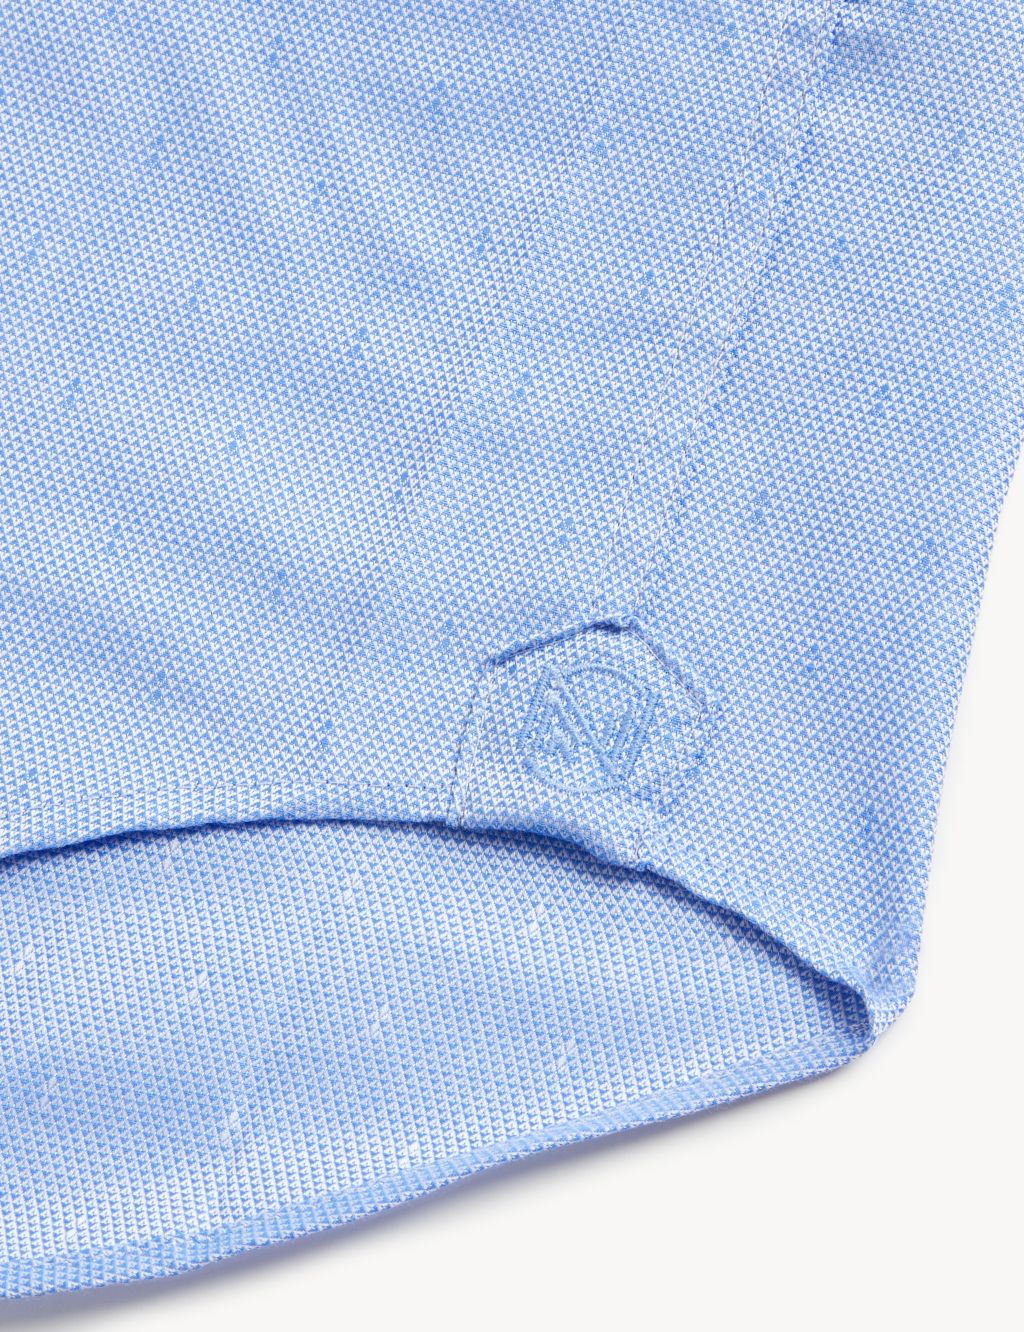 Regular Fit Pure Cotton Textured Shirt image 9